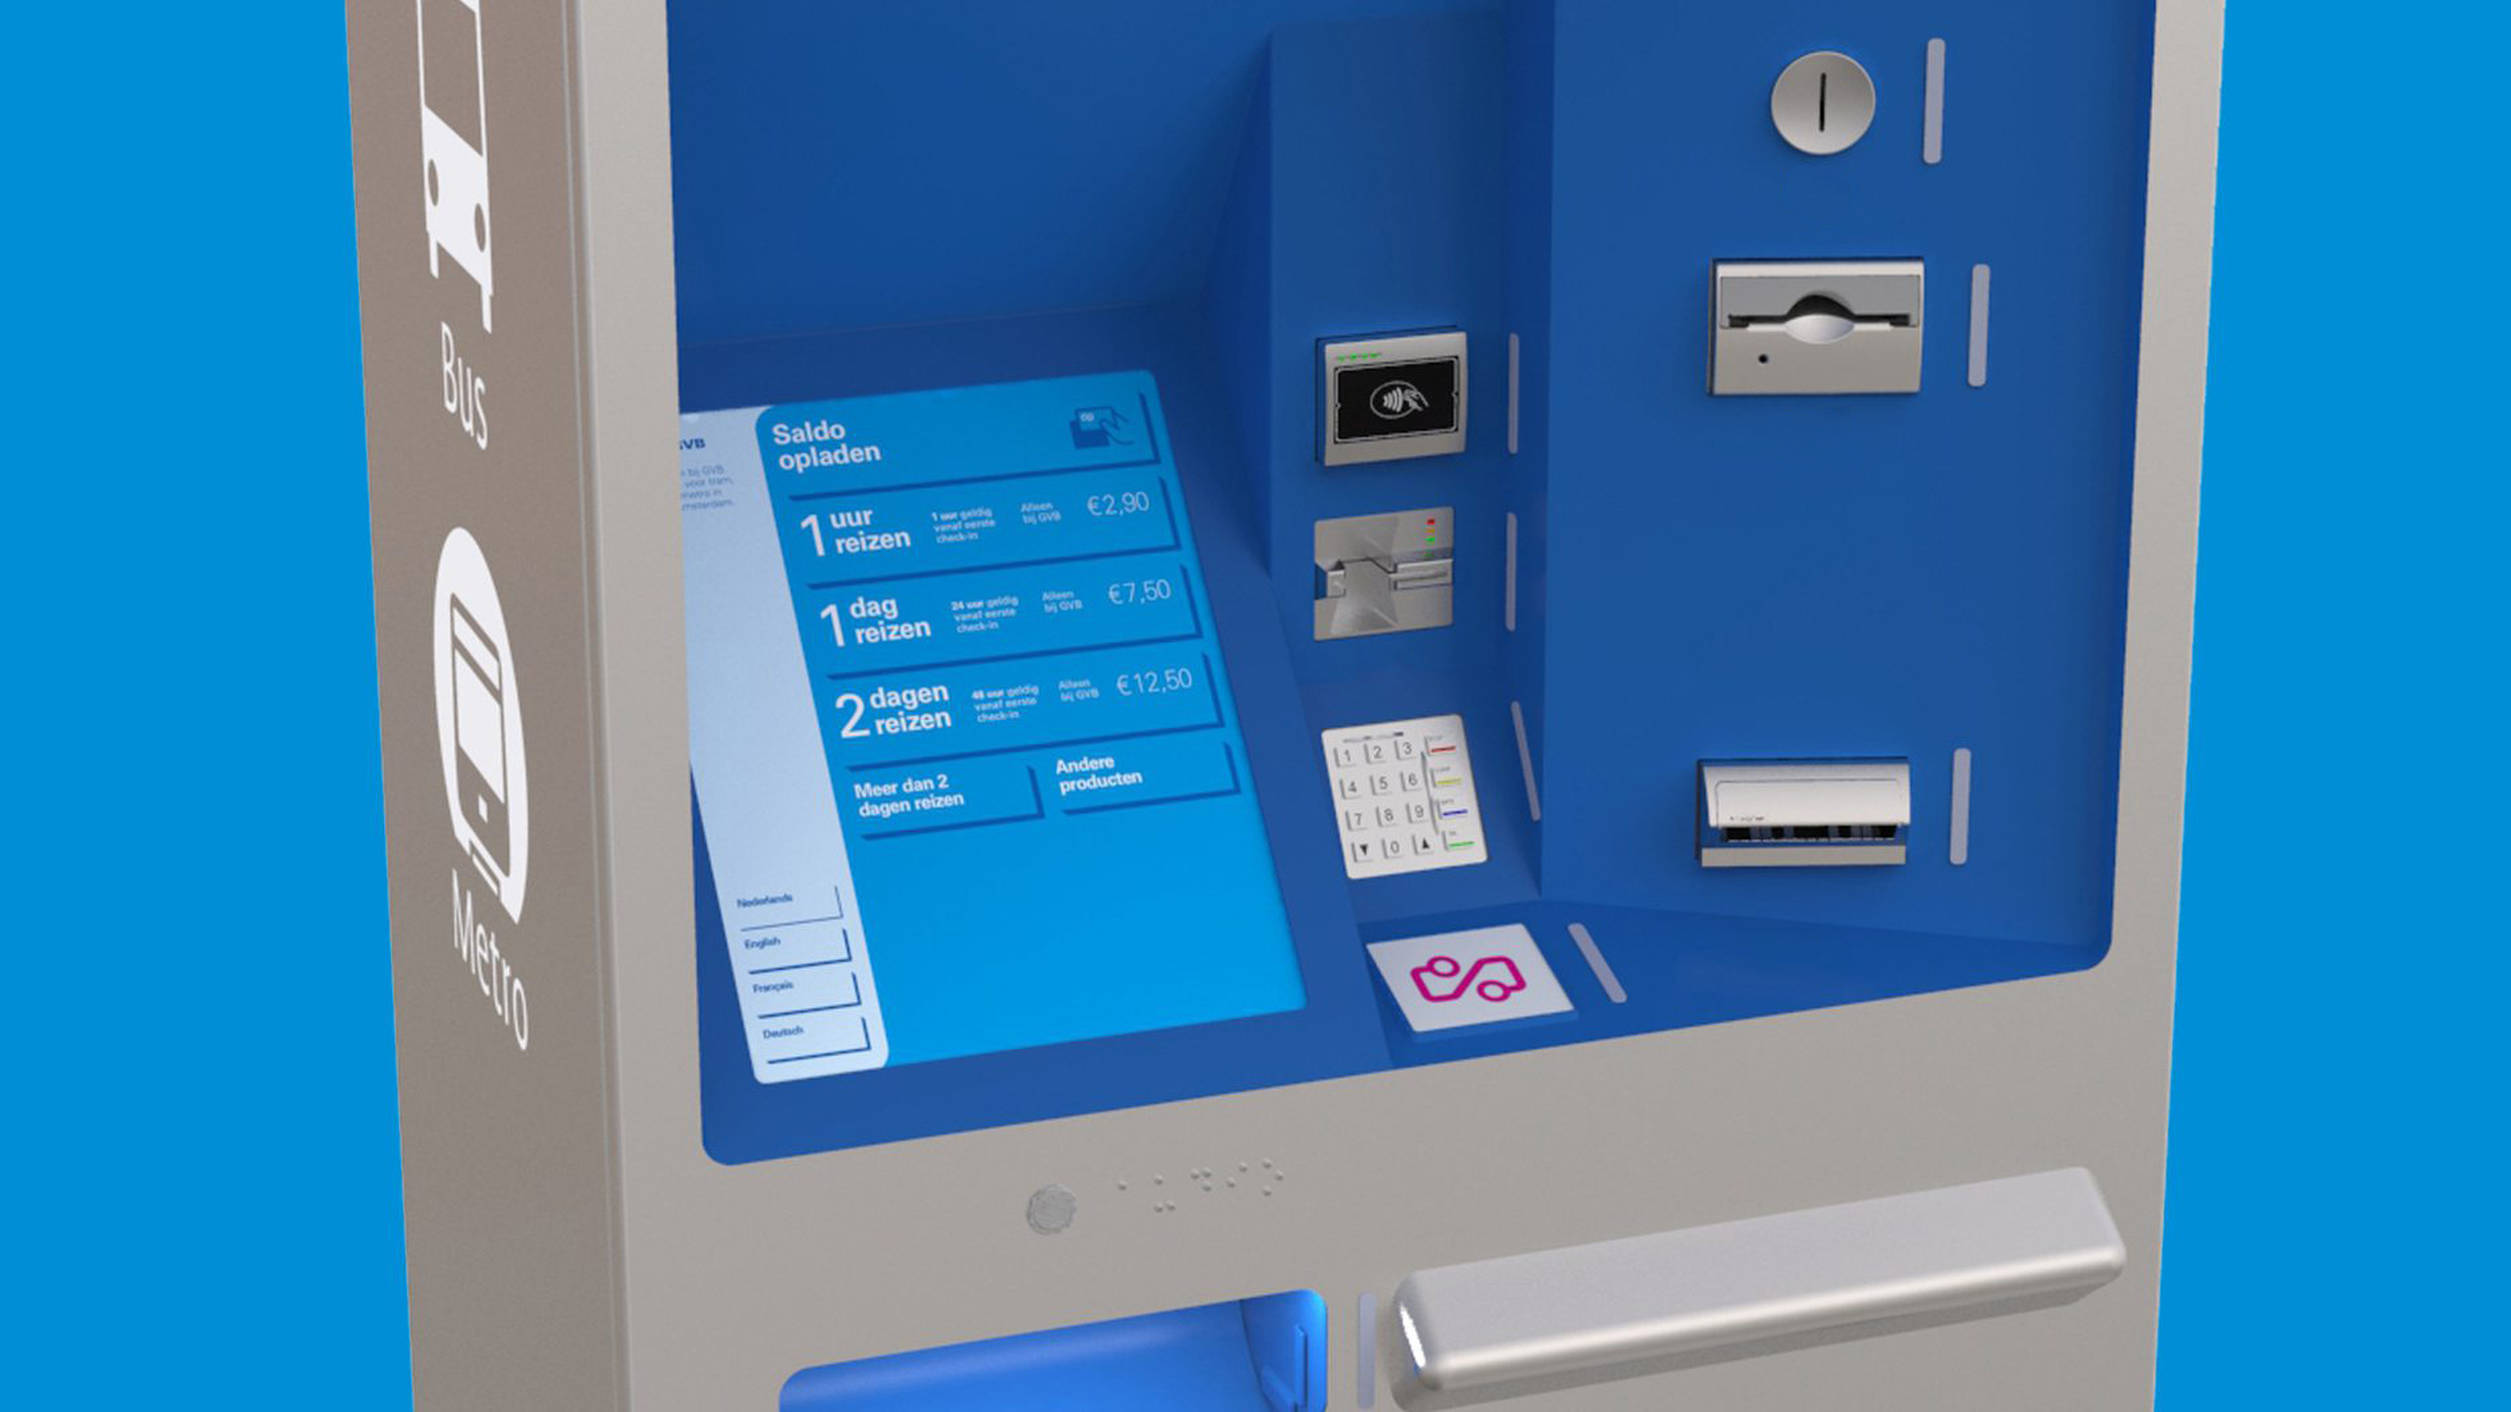 Design GVB kaartverkoopautomaat